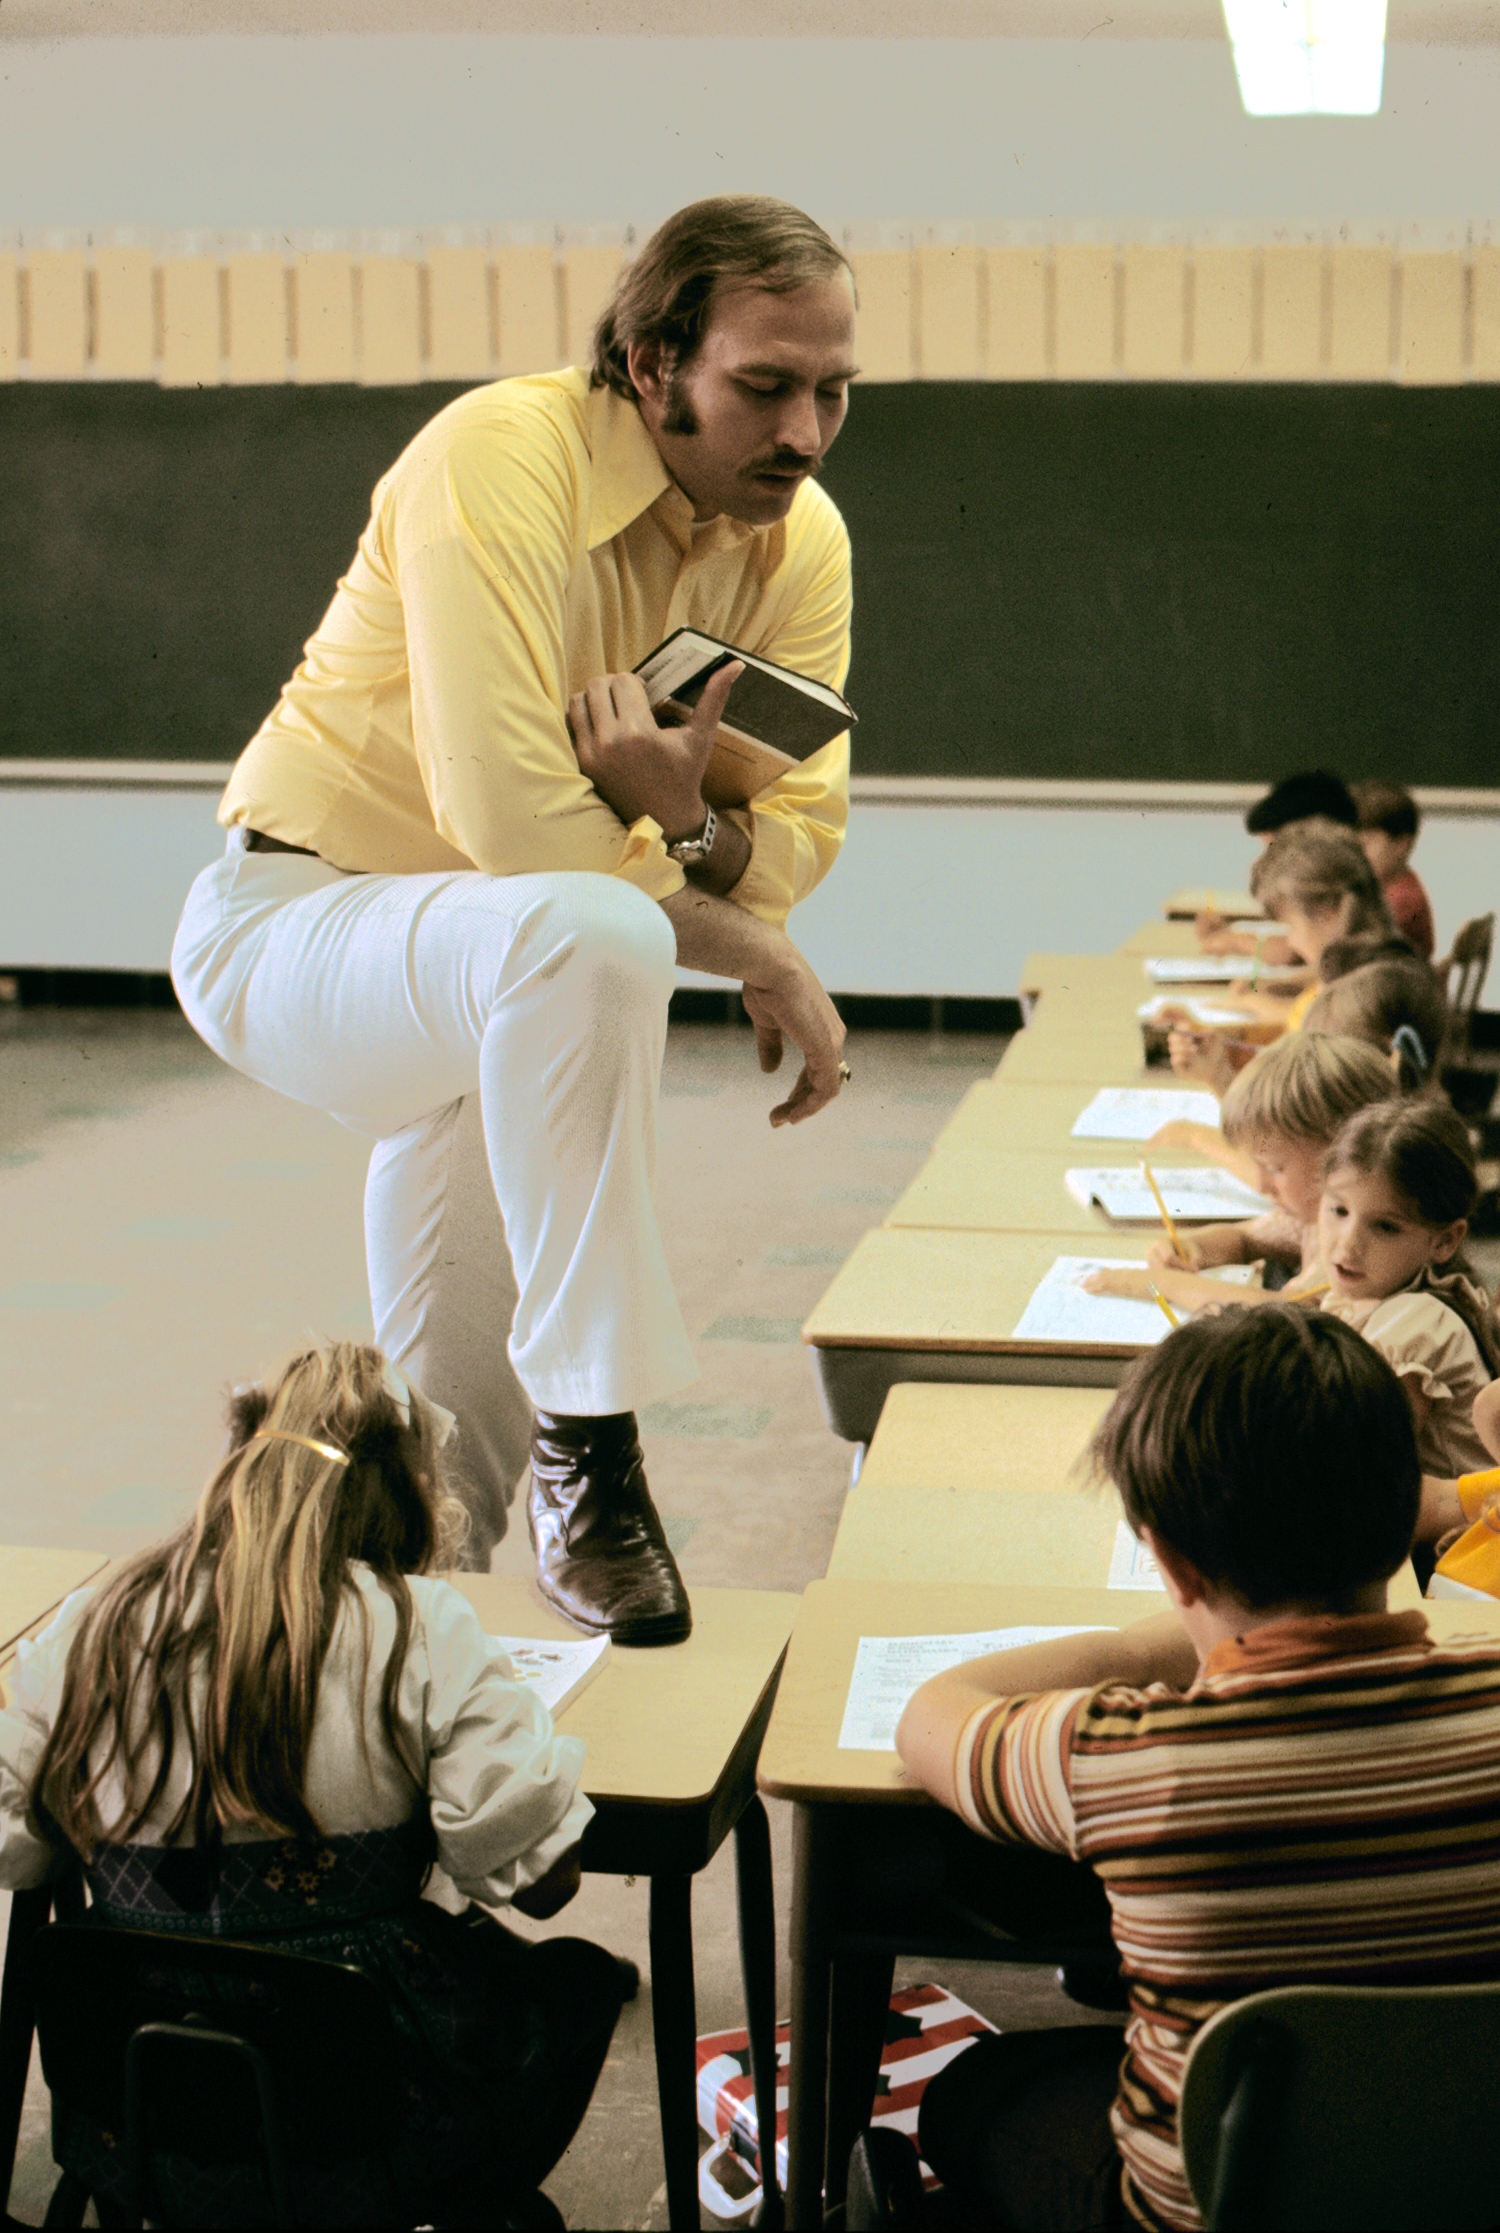 Male first grade teacher, Bill L'Orange as Calumet School in Chicago, 1972.